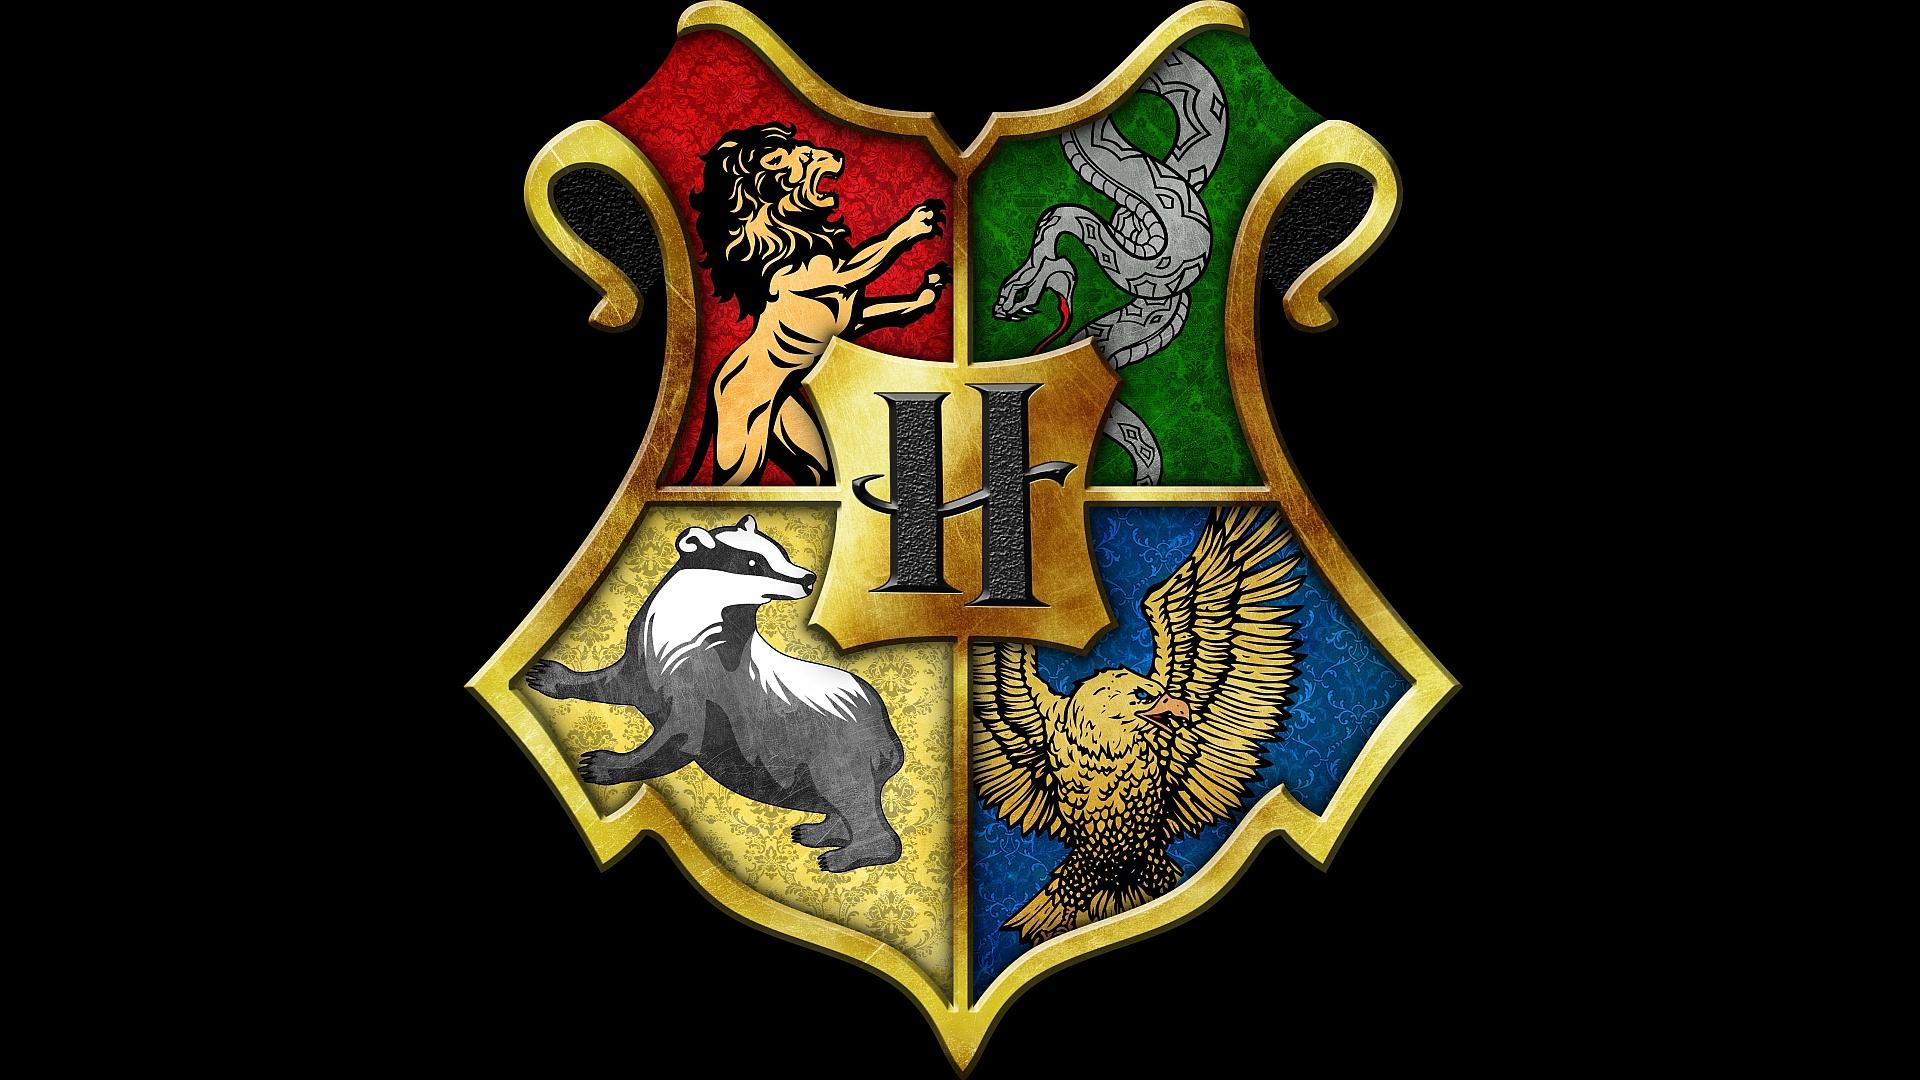 hogwarts legacy logo